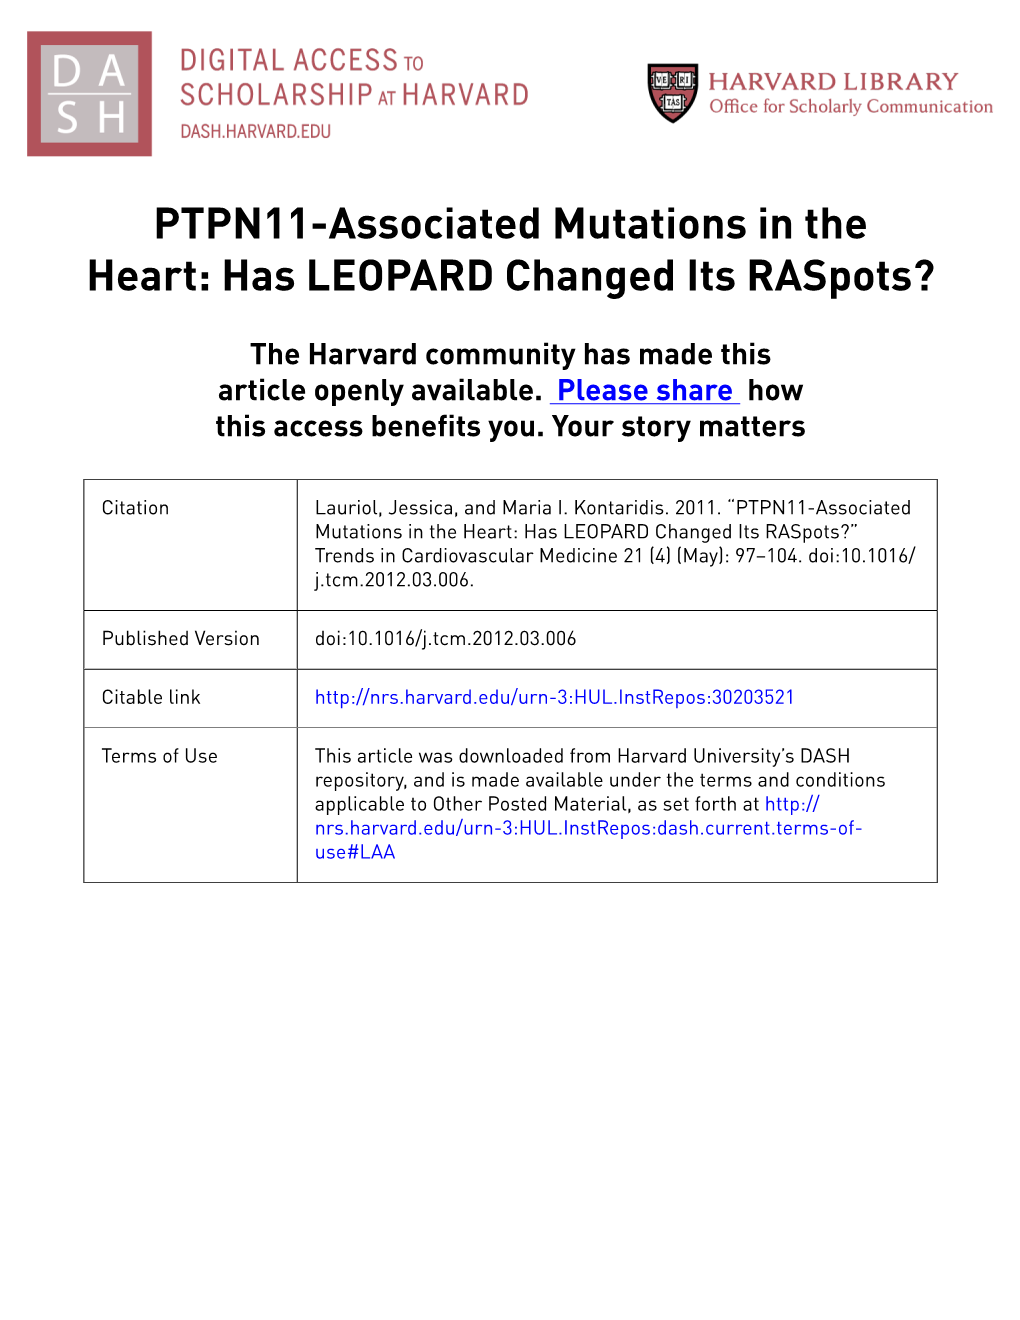 PTPN11-Associated Mutations in the Heart: Has LEOPARD Changed Its Raspots?